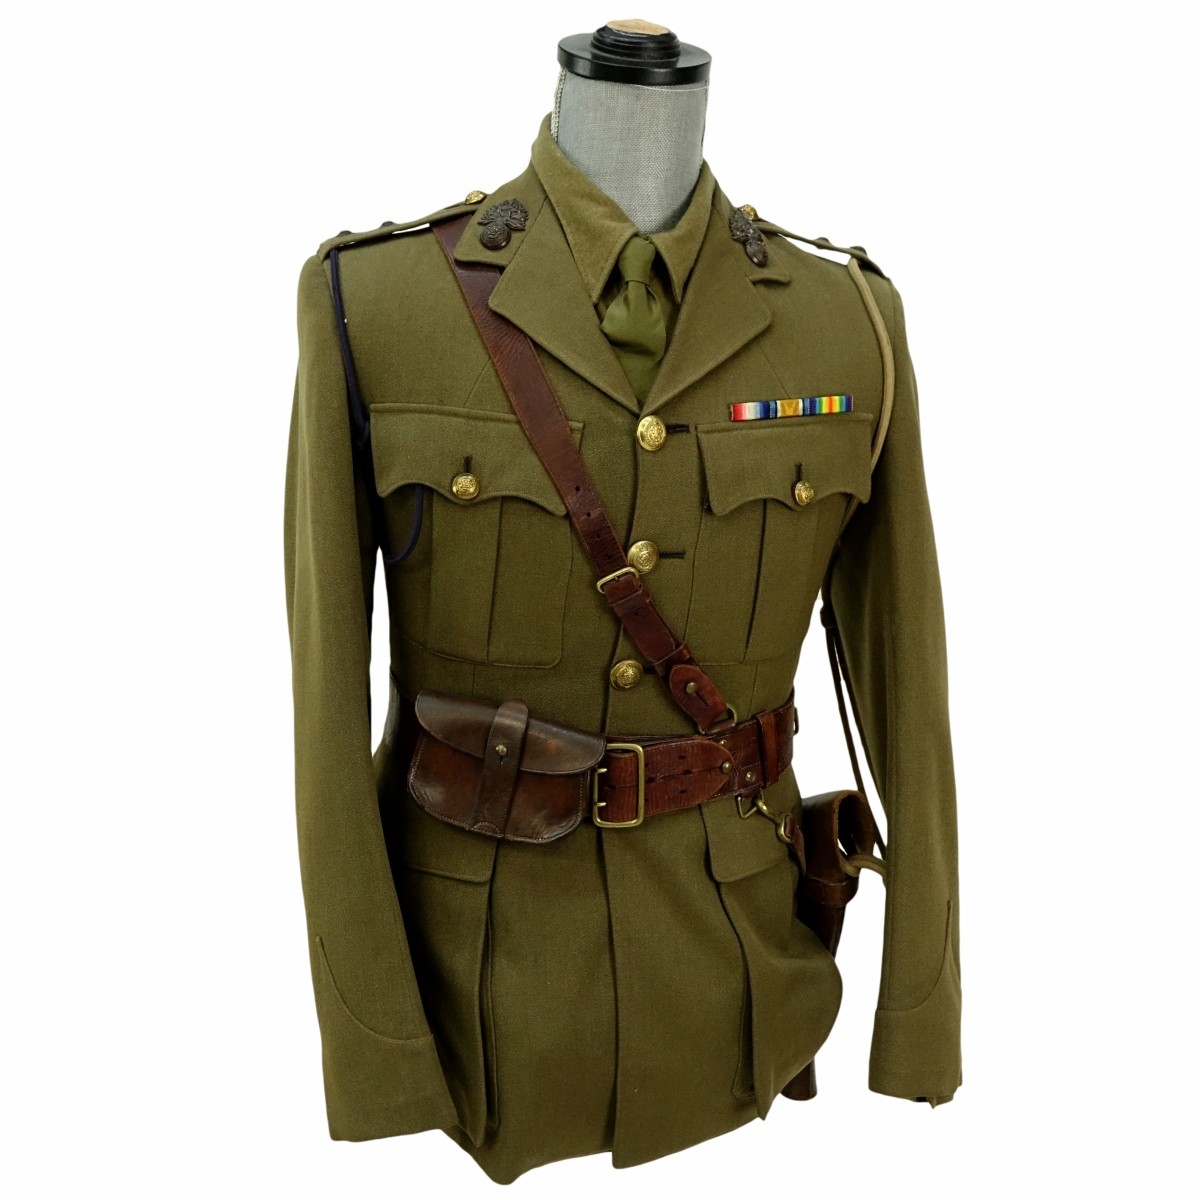 Vintage World War II Era Military Uniform